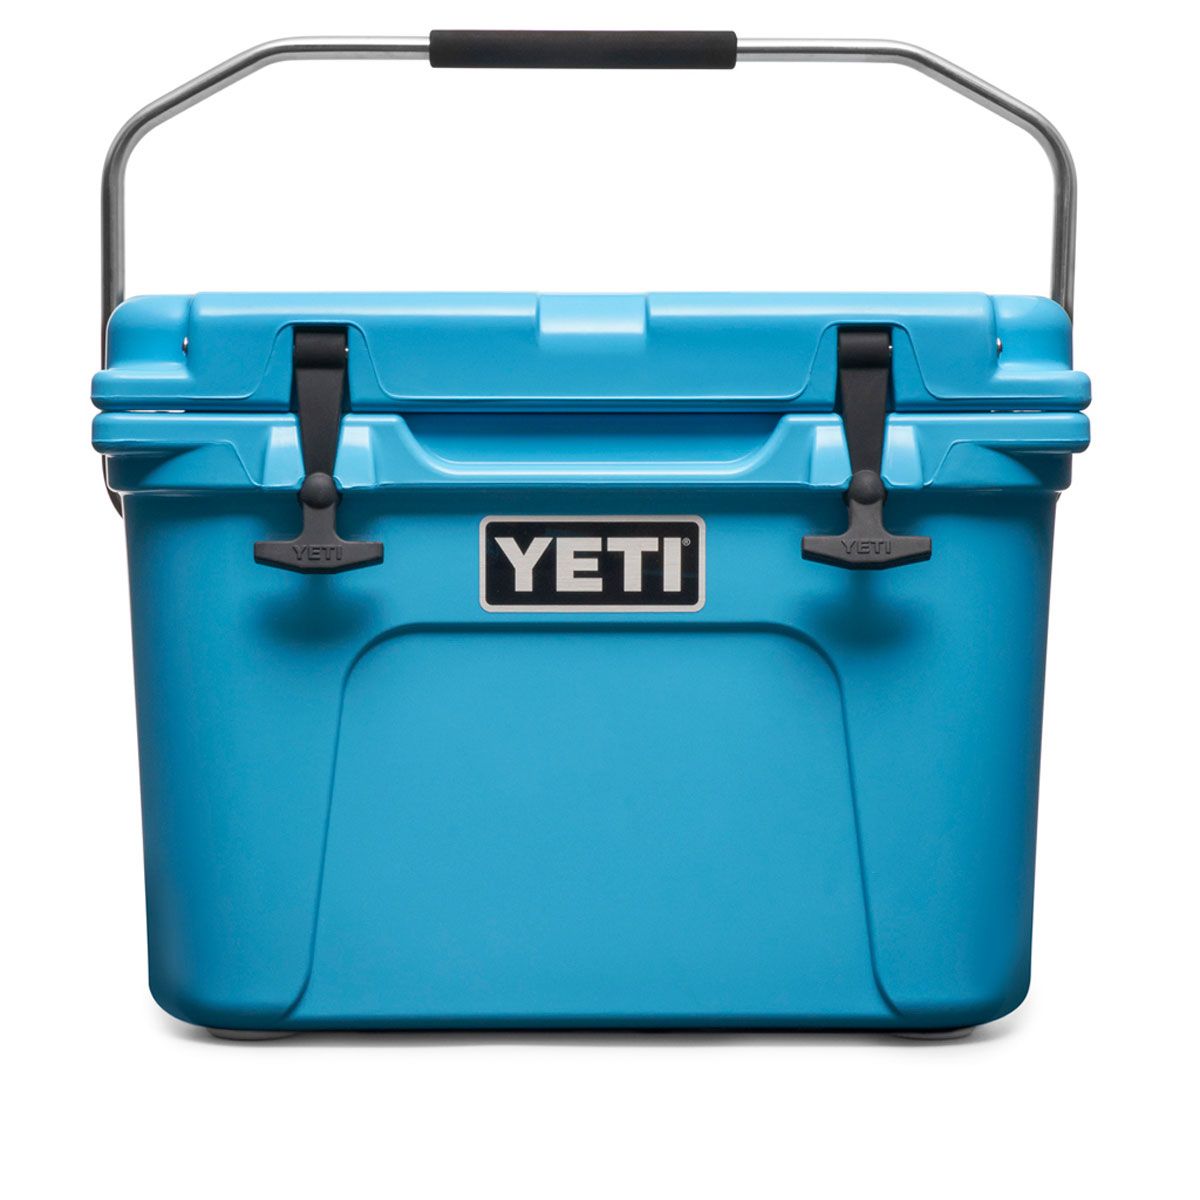 Yeti Coolers Roadie 20 Cooler - Limited Edition Reef Blue - AustinKayak